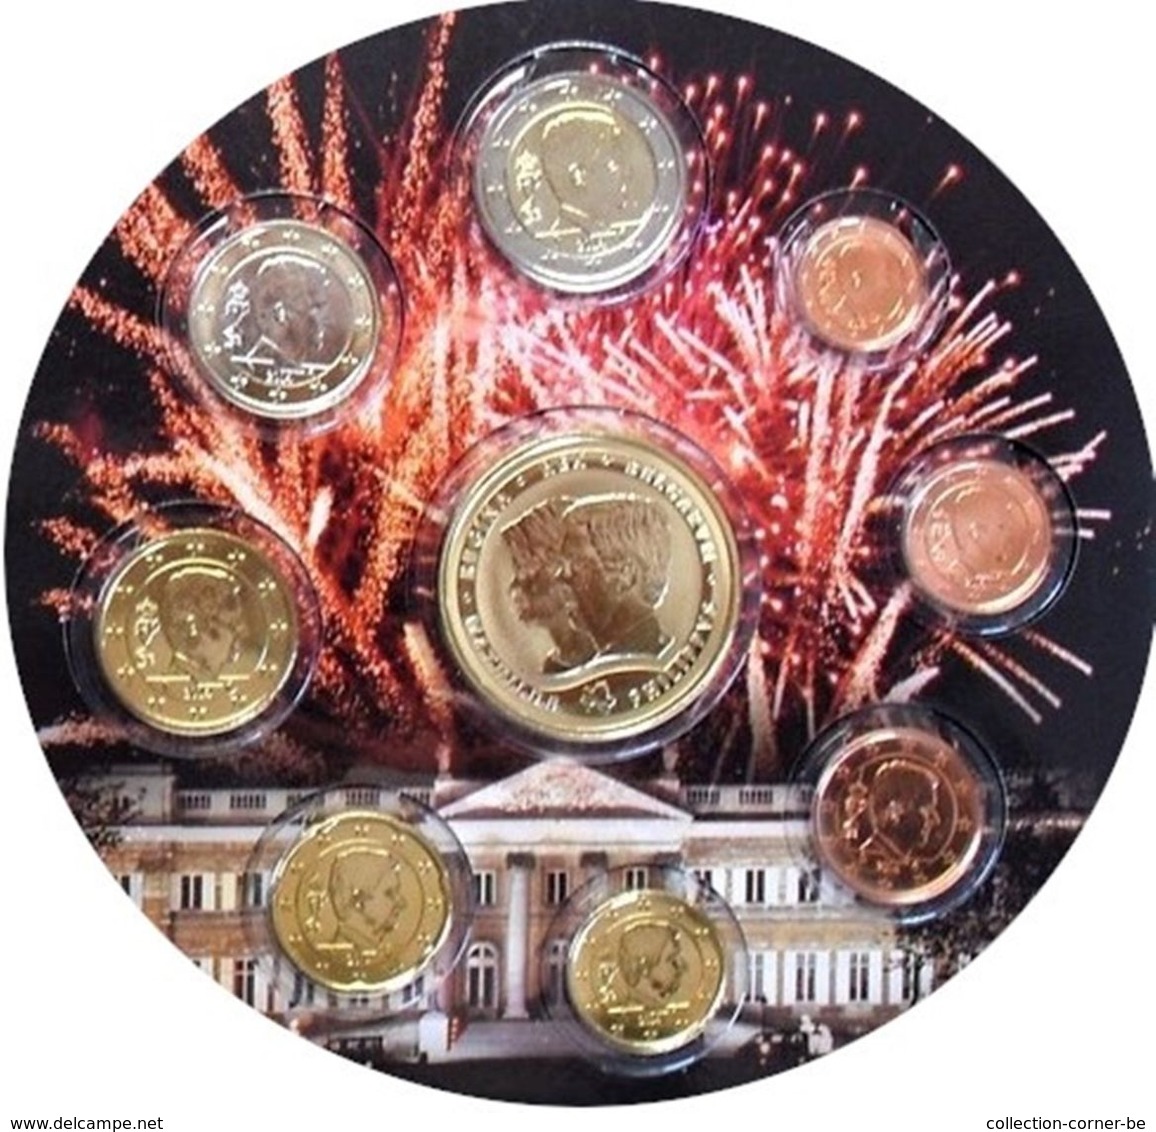 Belgie, euro set 2014, Filip koning der Belgen  FDC, van 1 cent tot 2 euro